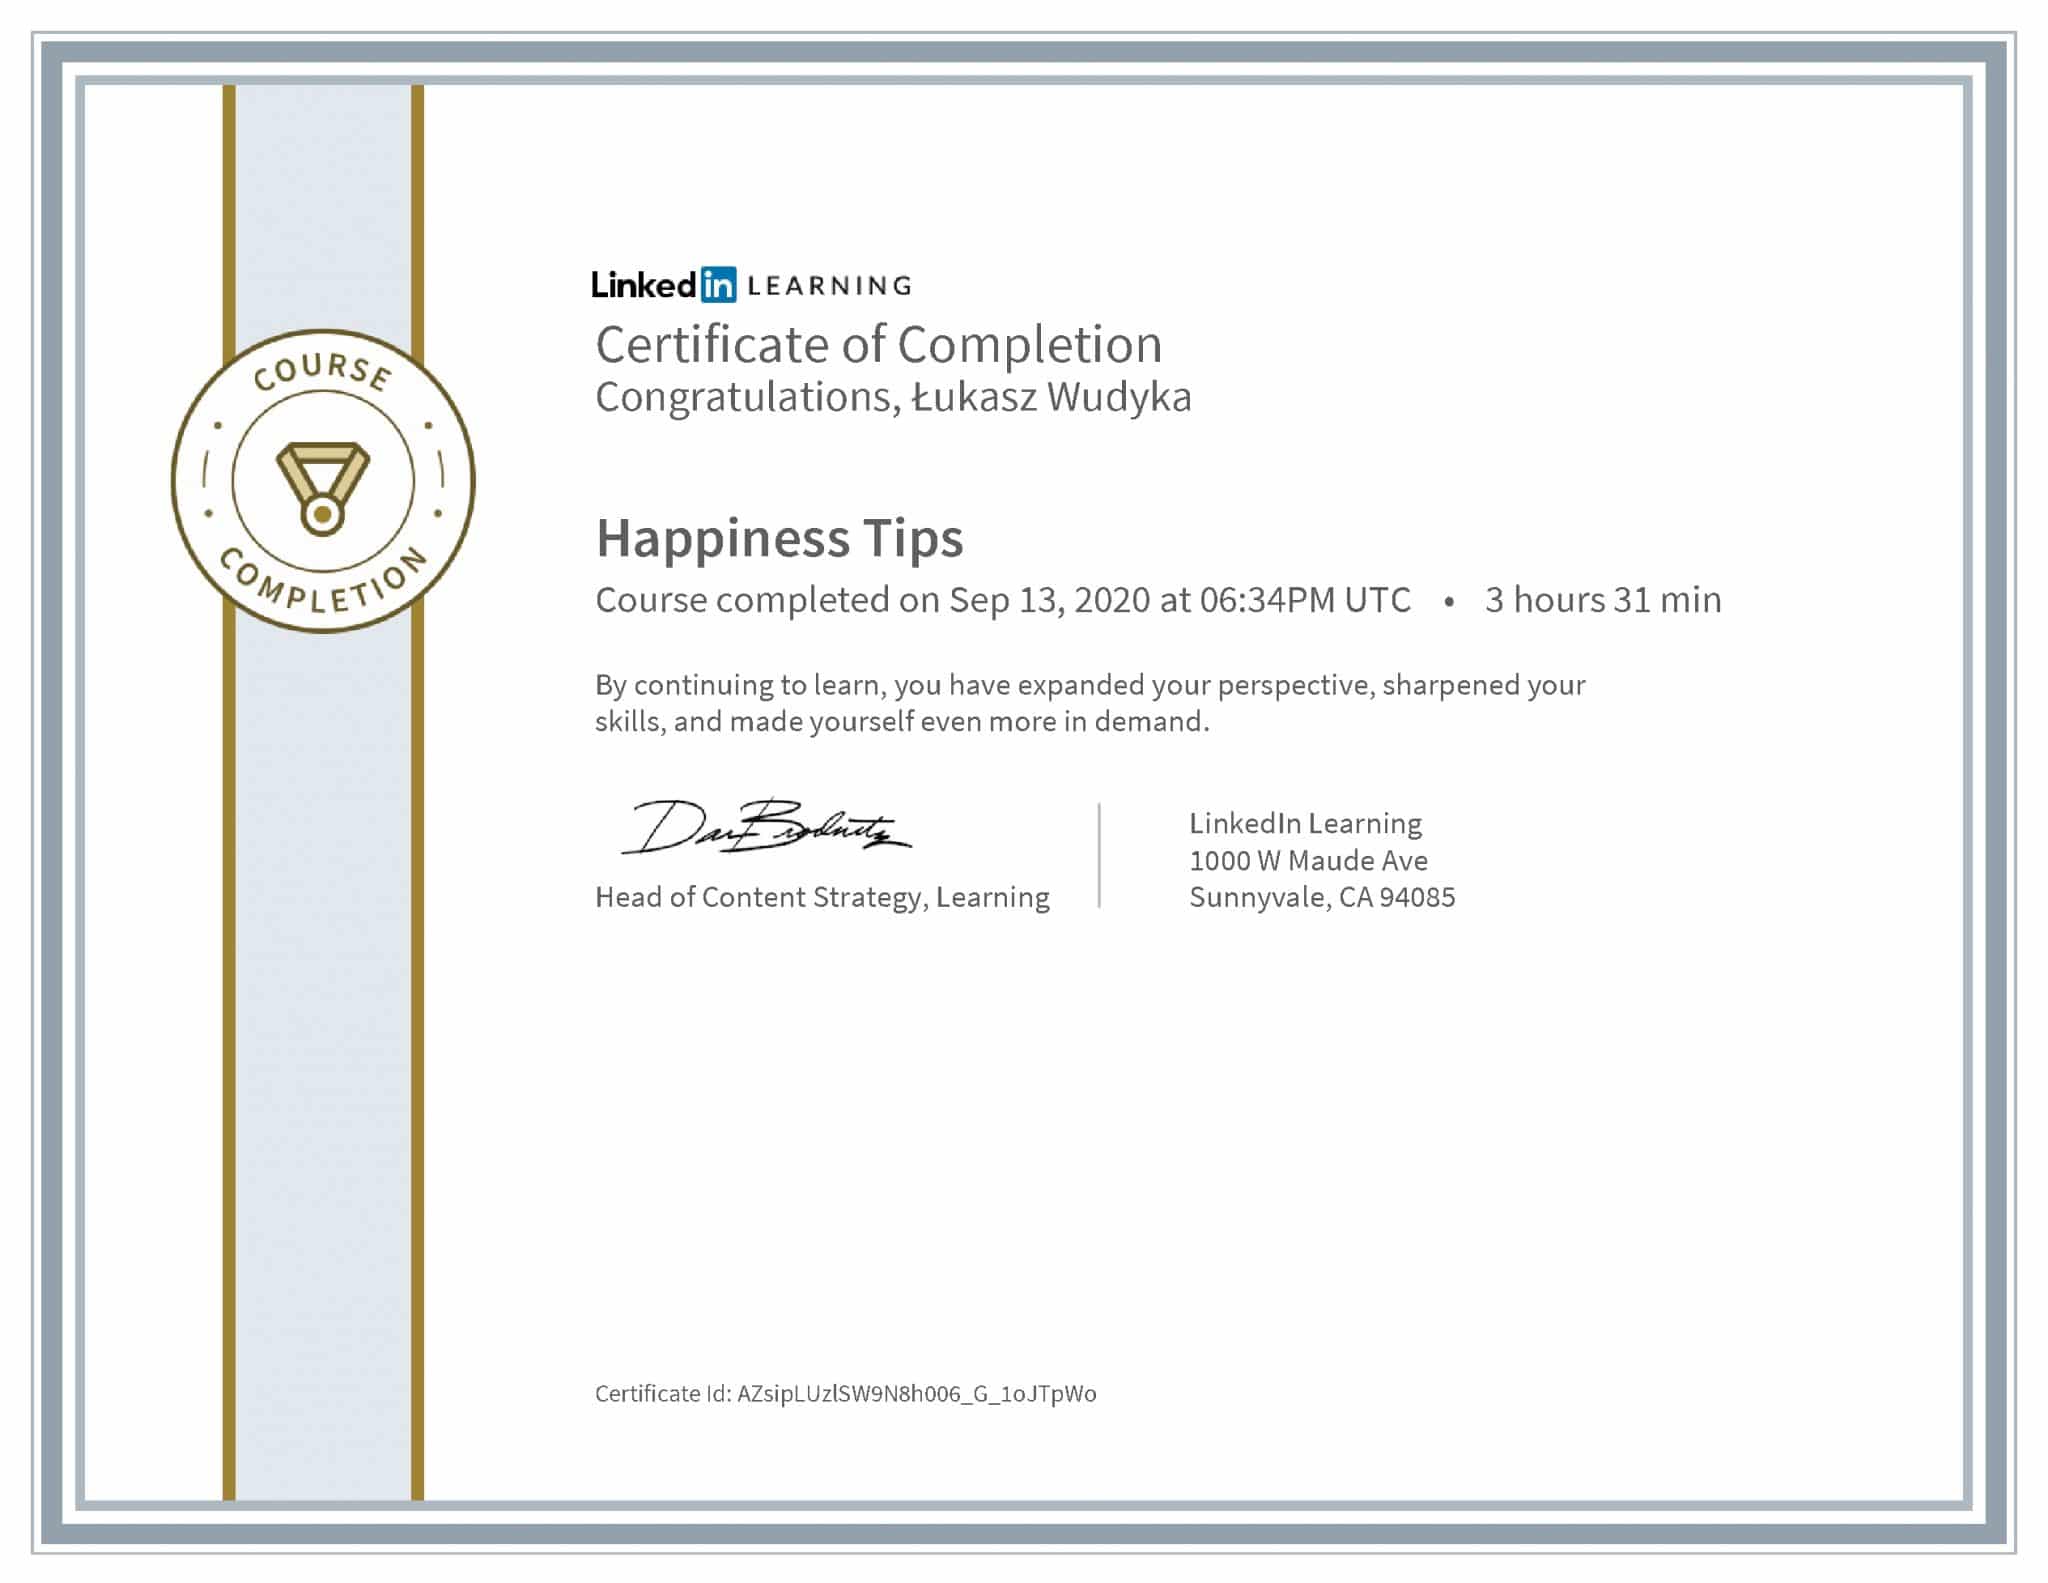 Łukasz Wudyka certyfikat LinkedIn Happines Tips